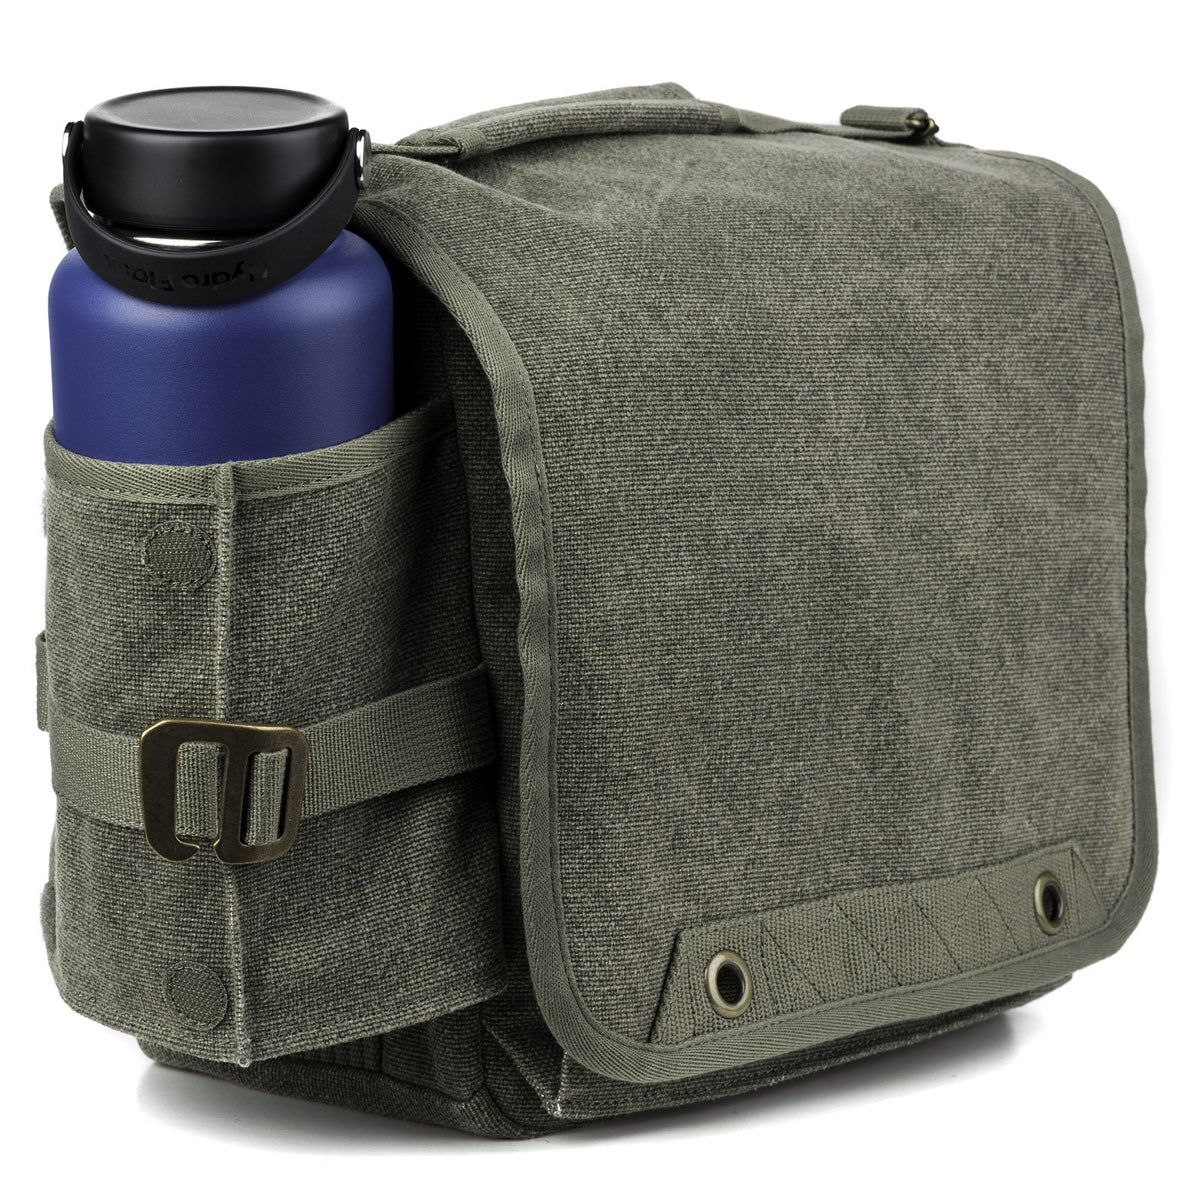 Think Tank Retrospective 10 v2.0 Shoulder Camera Bag (Pinestone)